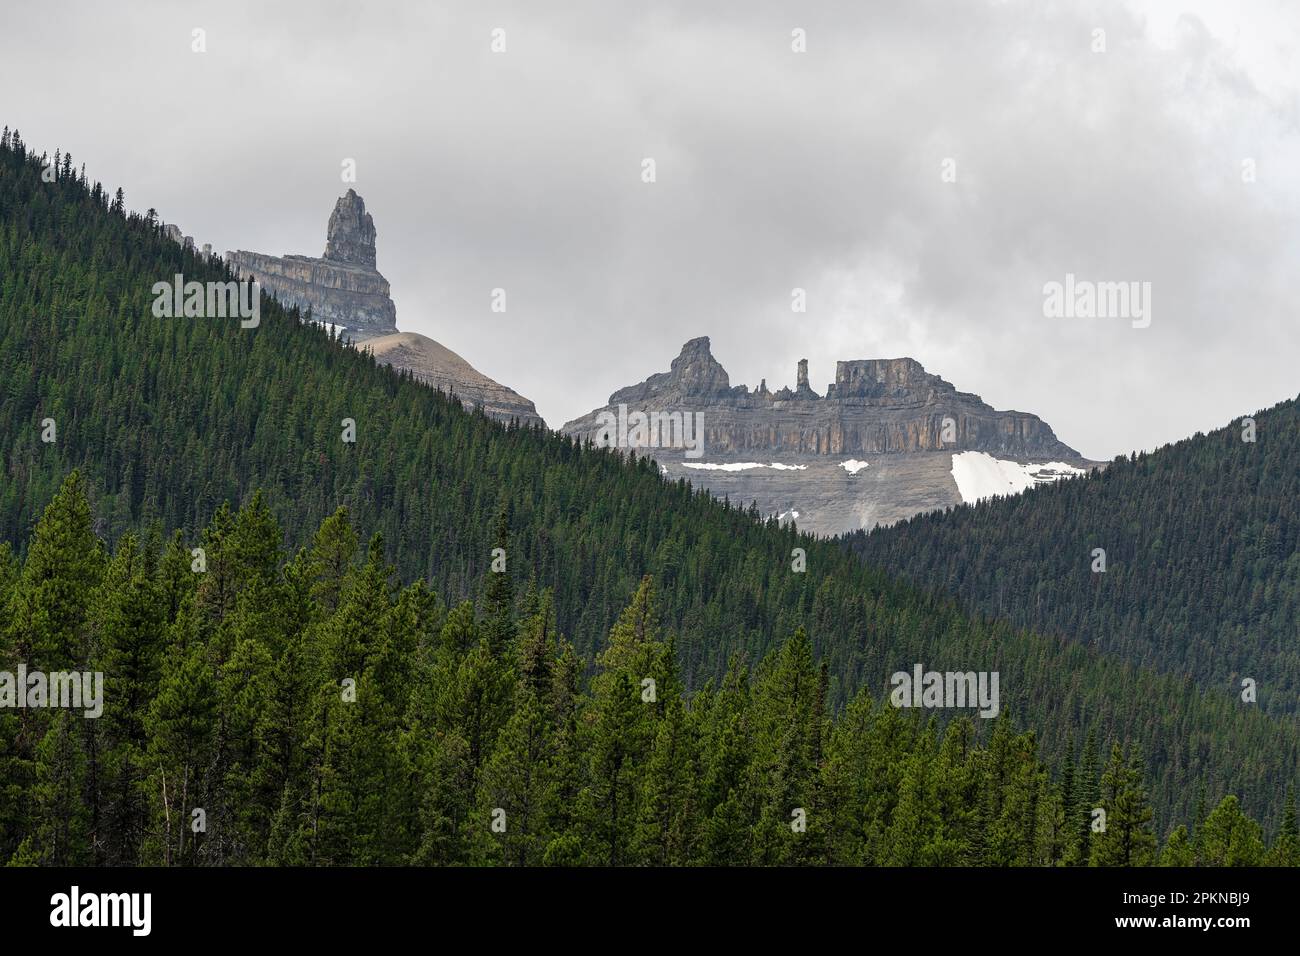 Mount Saskatchewan and Cleopatra's Needle along Icefields Parkway, Banff national park, Canada. Stock Photo